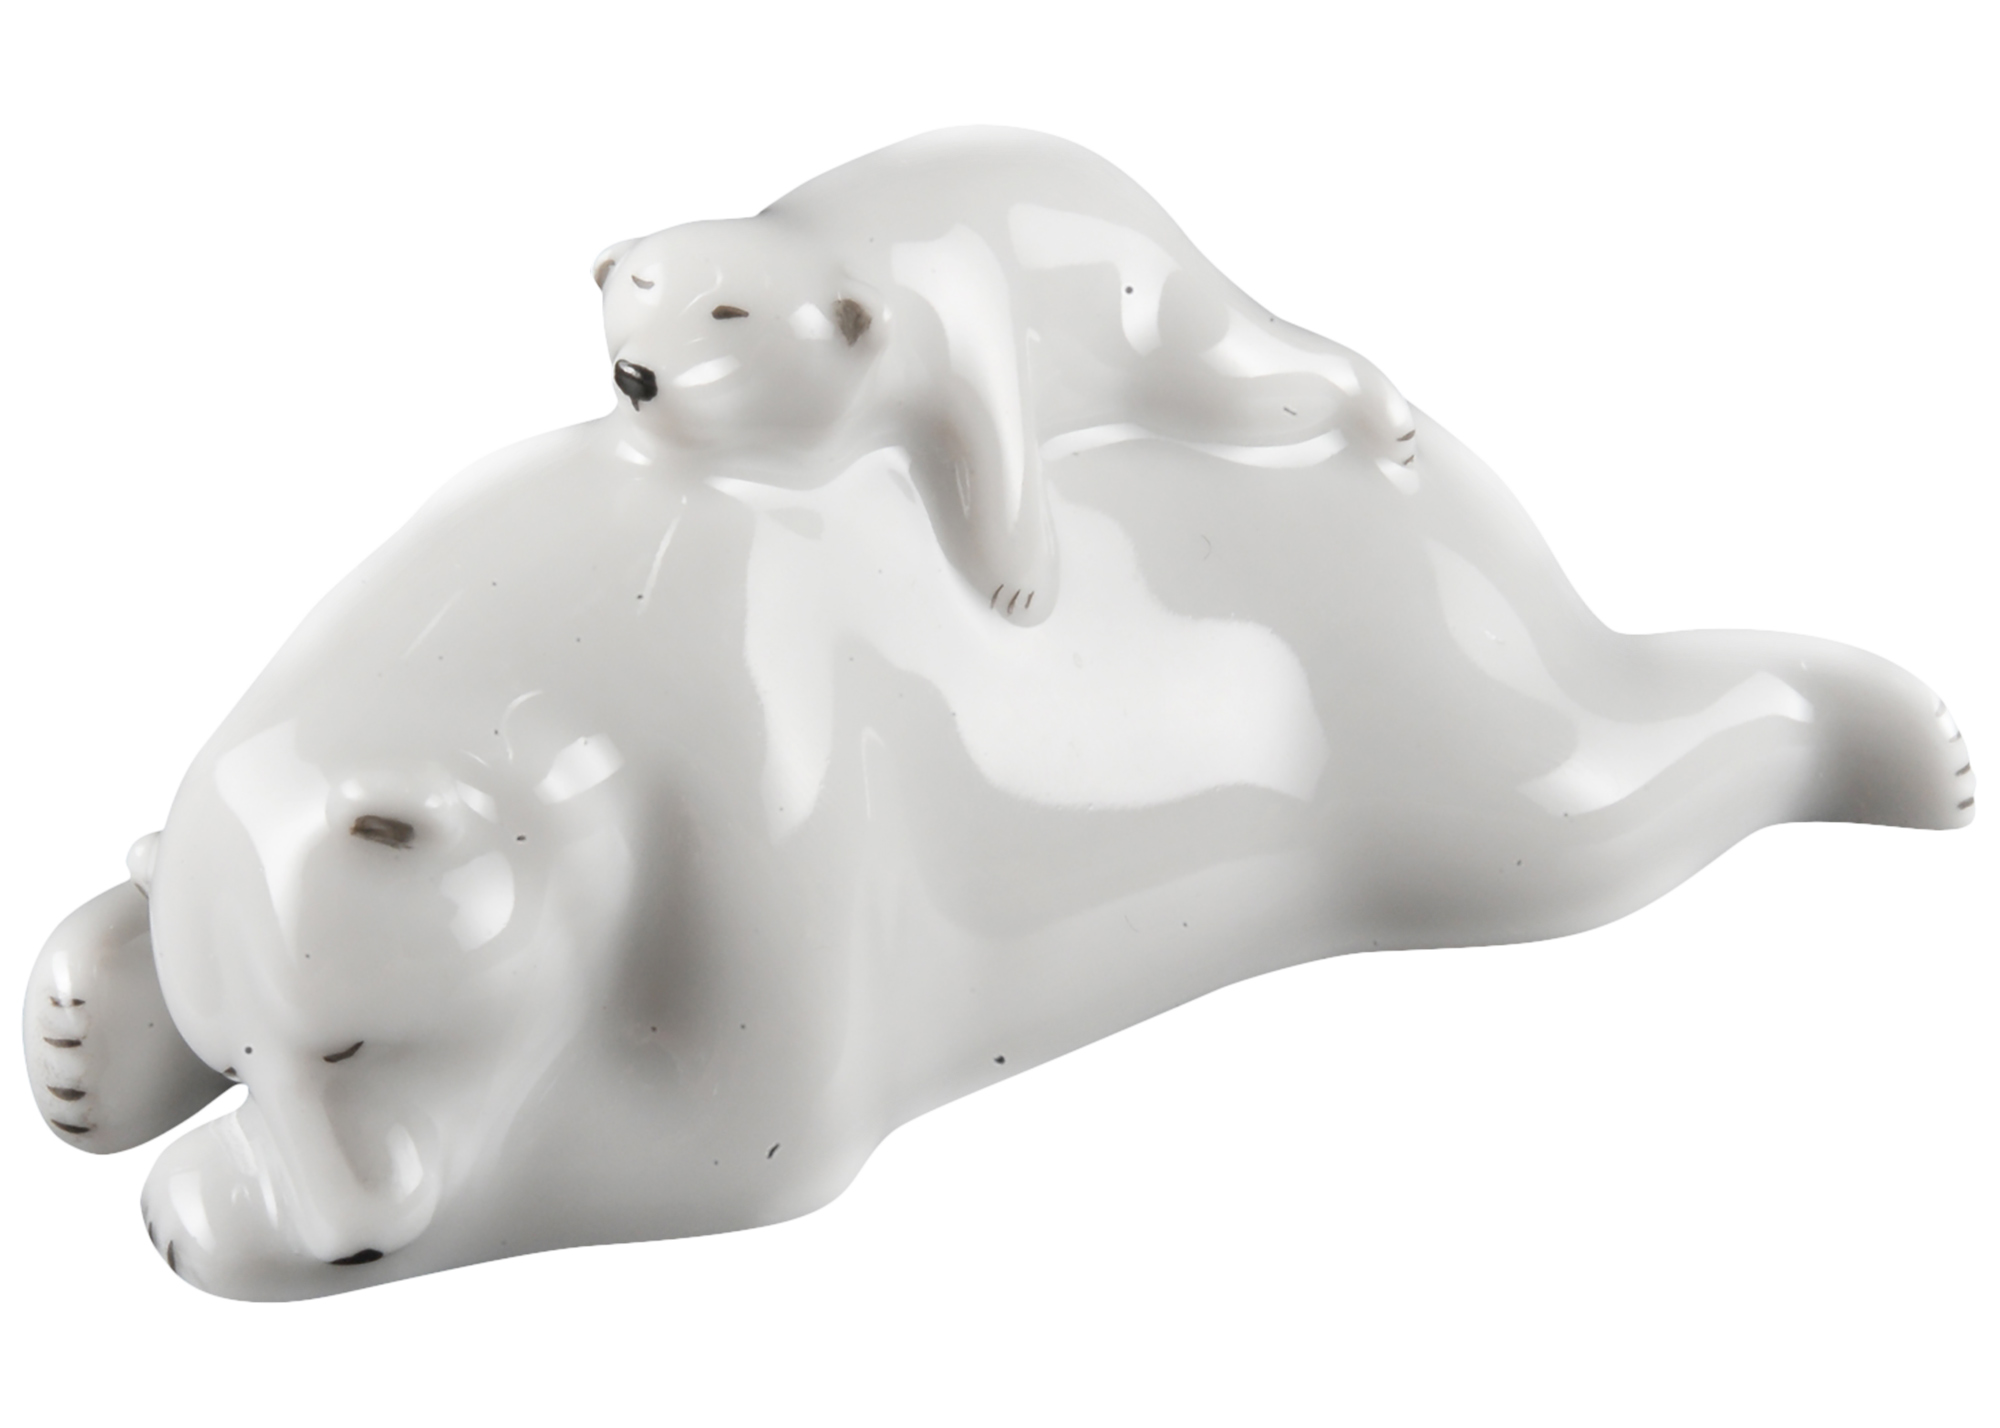 Buy Mother Polar Bear Naps With Cub Porcelain Figurine at GoldenCockerel.com